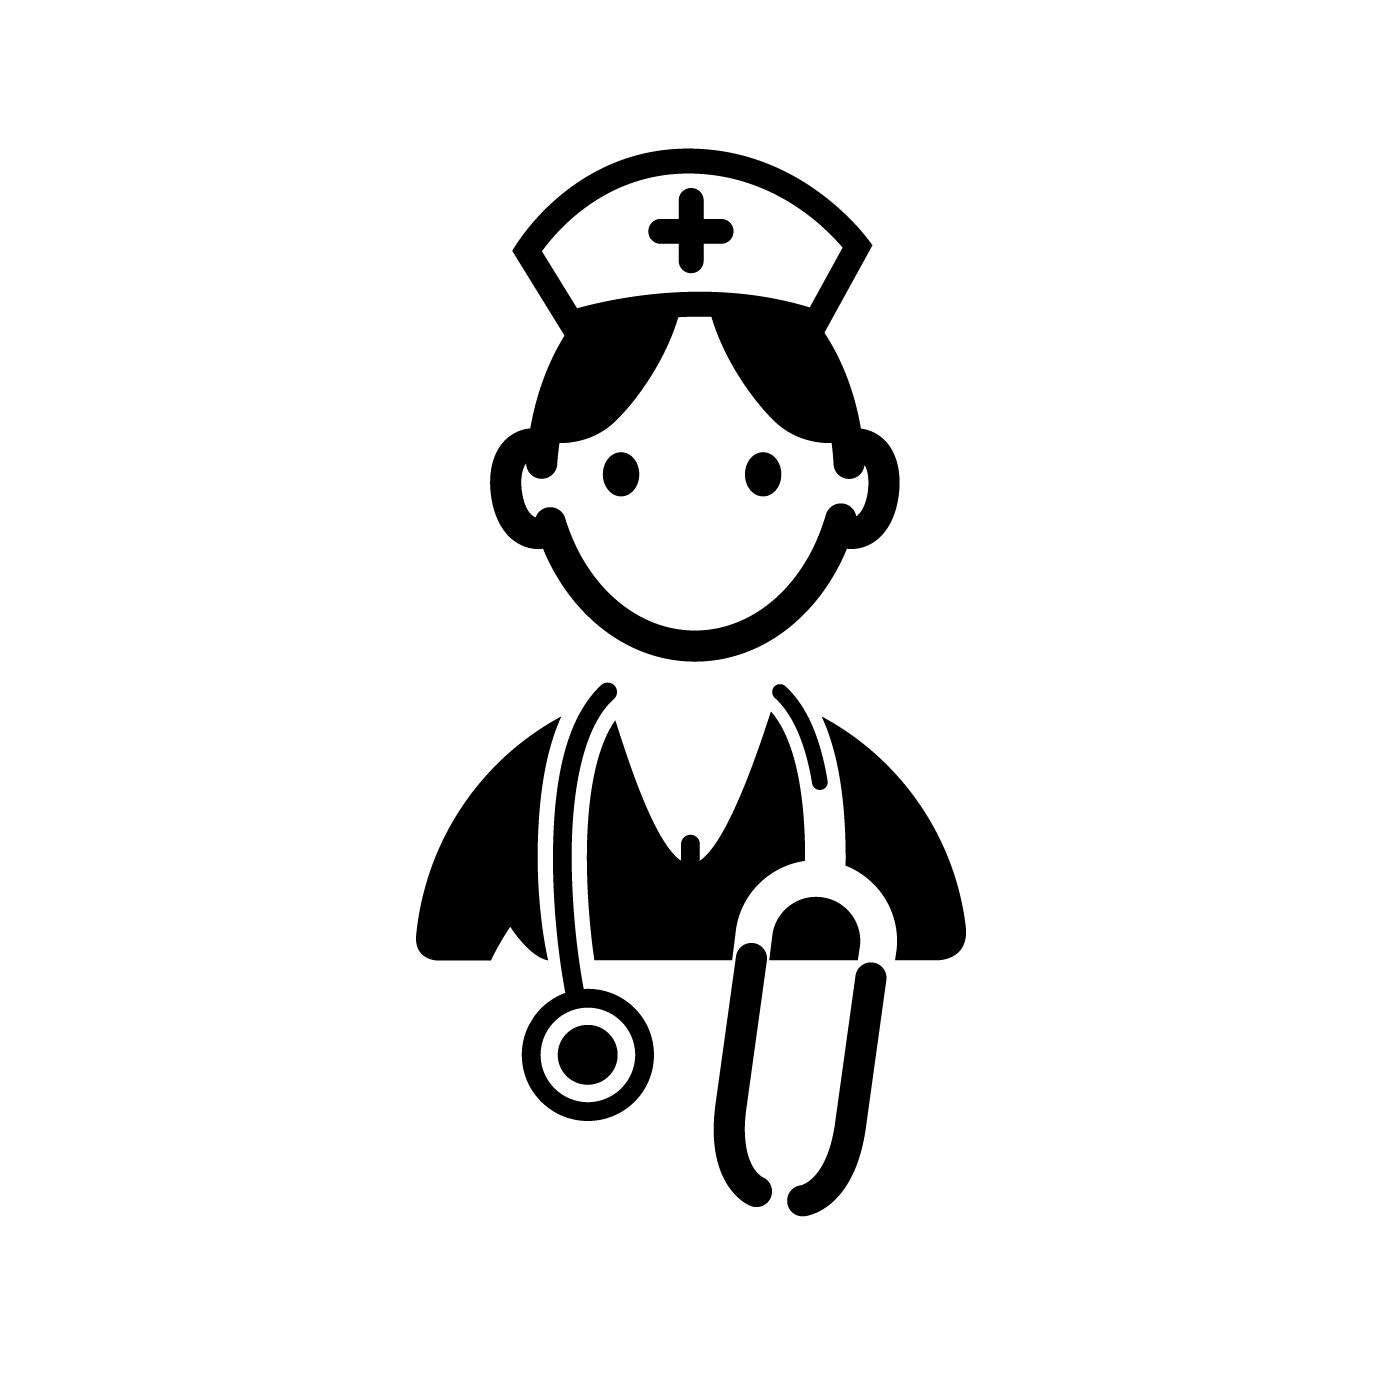 Nurisng Logo - Free Registered Nurse Clipart, Download Free Clip Art, Free Clip